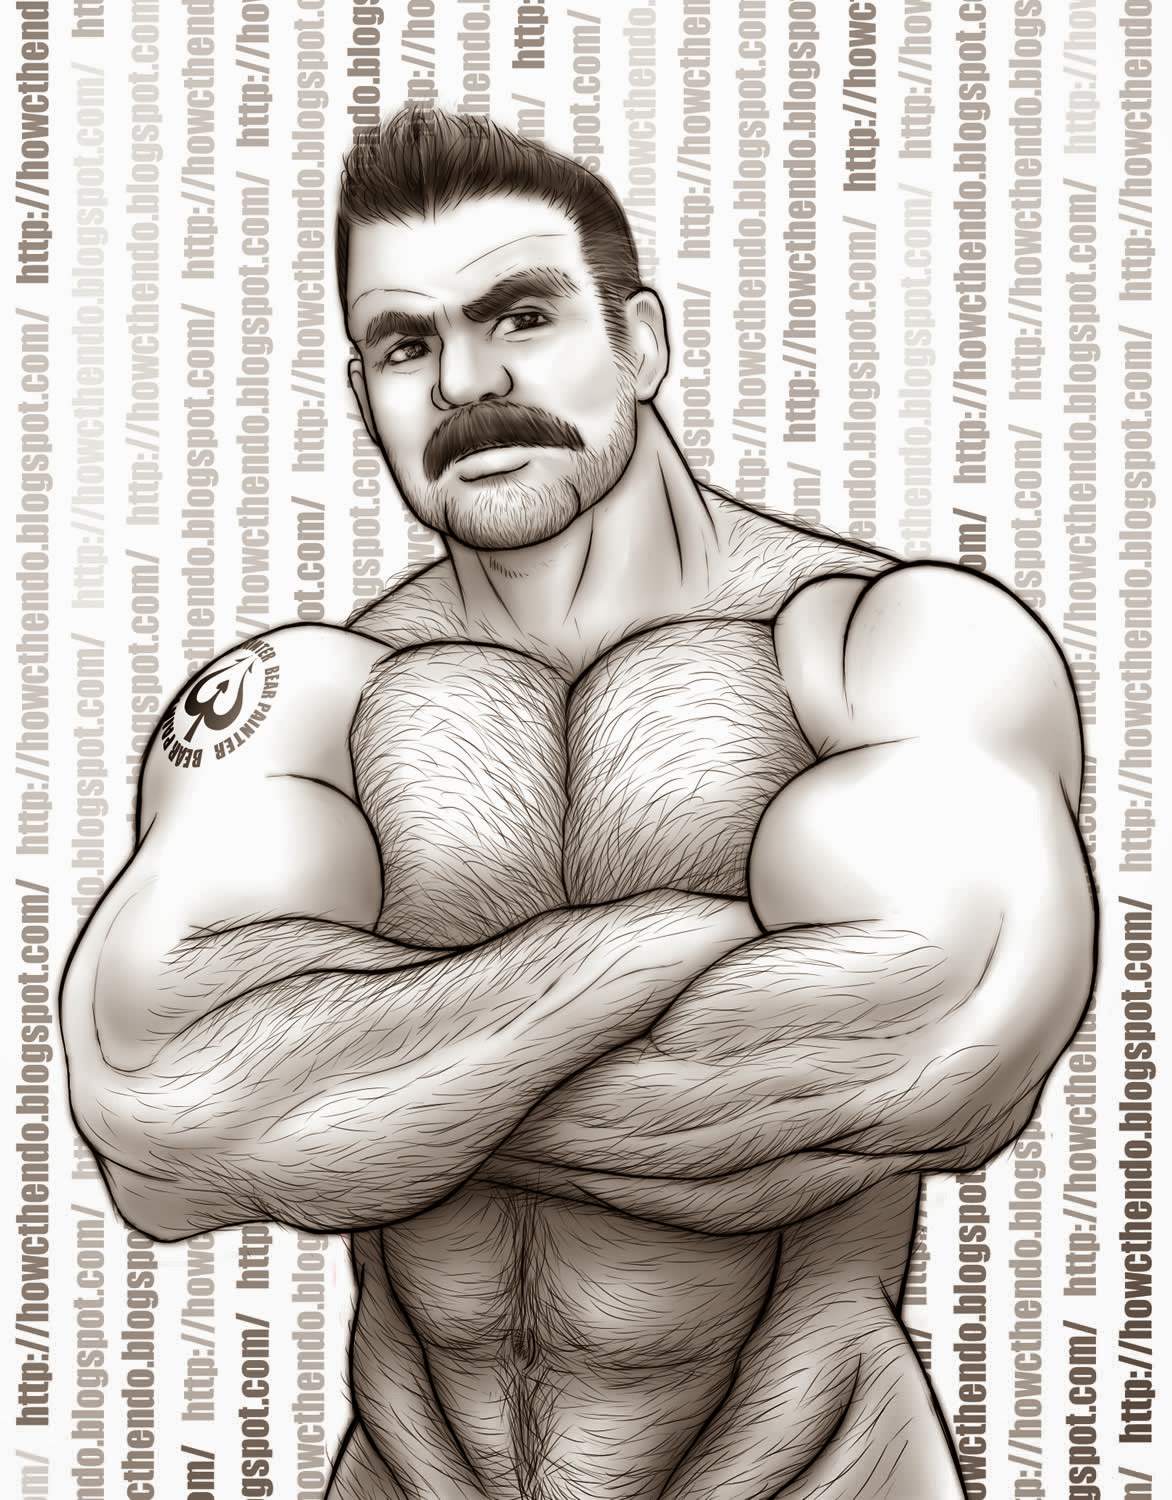 Bear muscle draw. Hairy Chest cartoon. Hairy Art. Muscle Bear man Art. Drew born